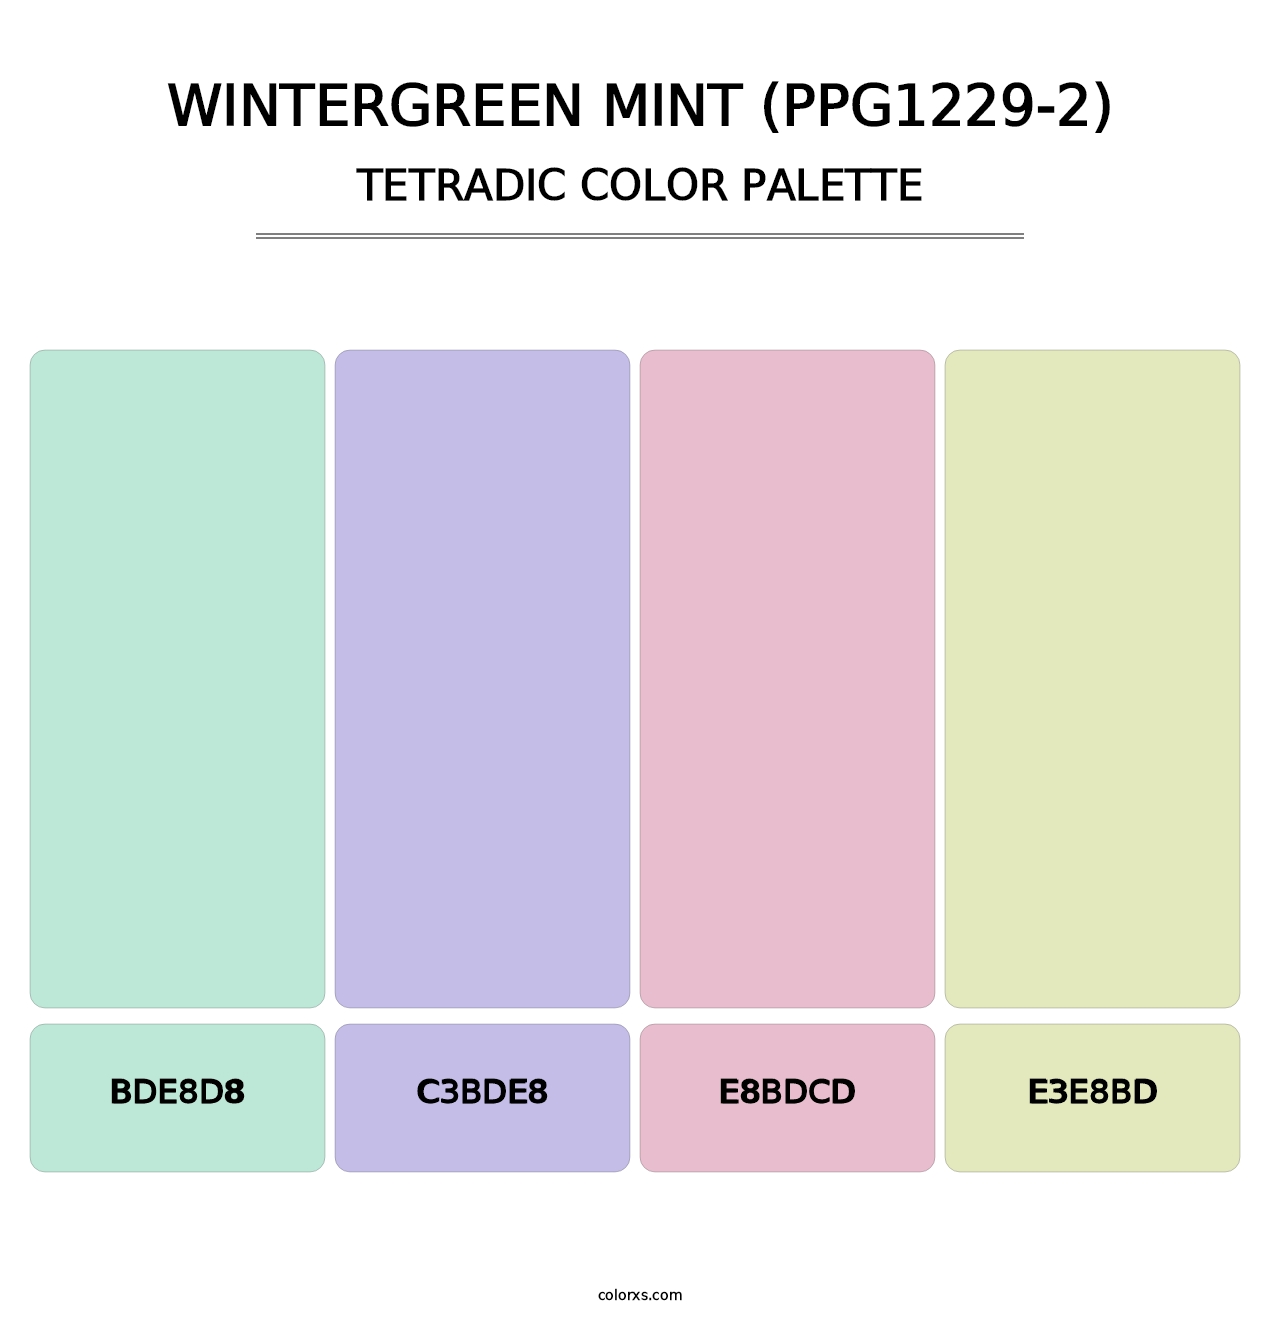 Wintergreen Mint (PPG1229-2) - Tetradic Color Palette